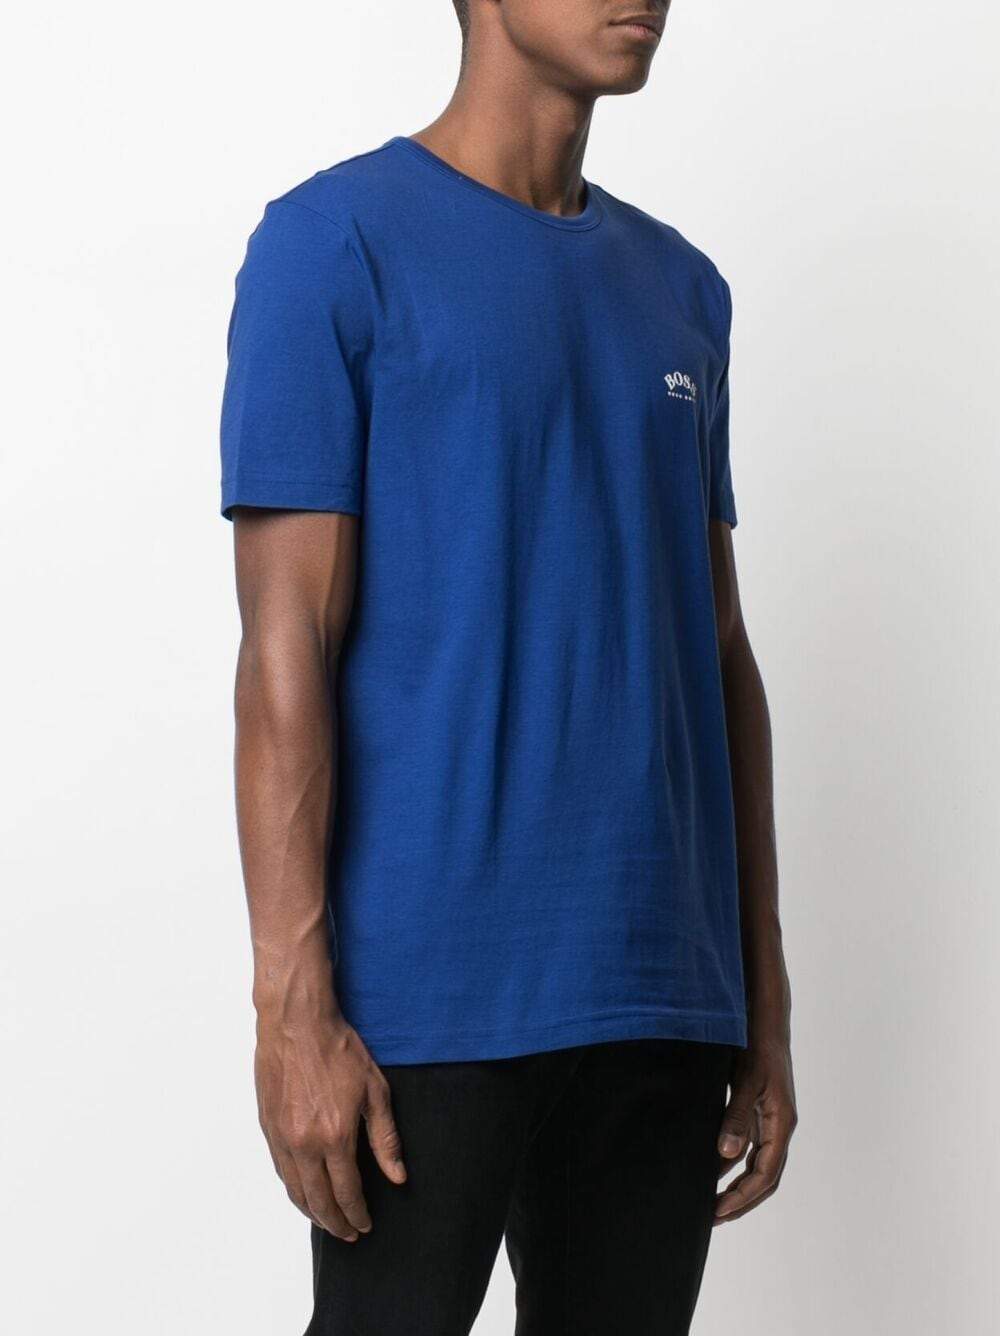 BOSS Curved Logo T-Shirt Blue - MAISONDEFASHION.COM